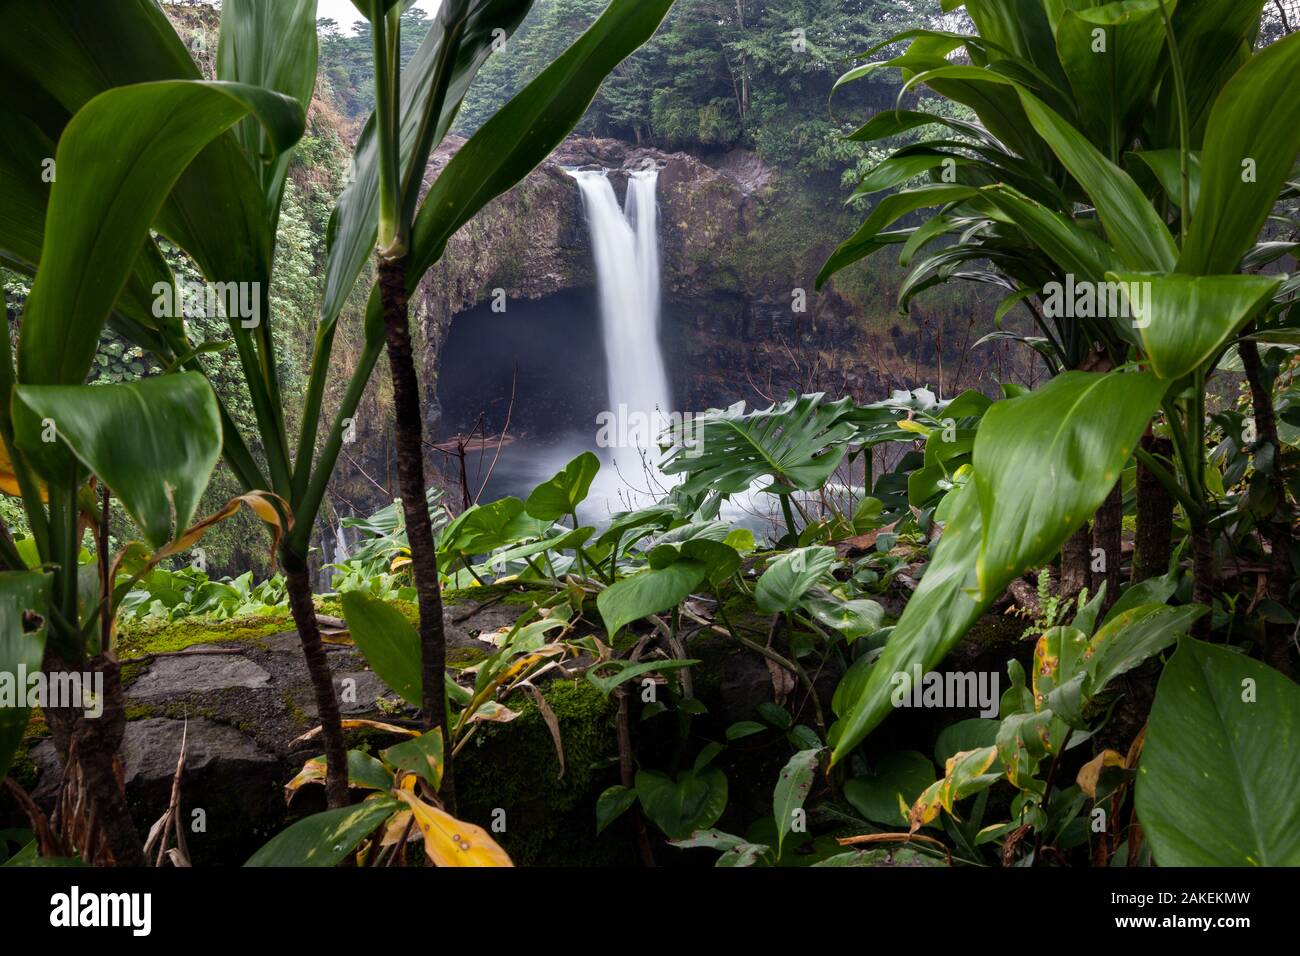 Rainbow Falls / Waiānuenue view framed by rainforest foliage, Hilo, Hawaii. December 2016. Stock Photo